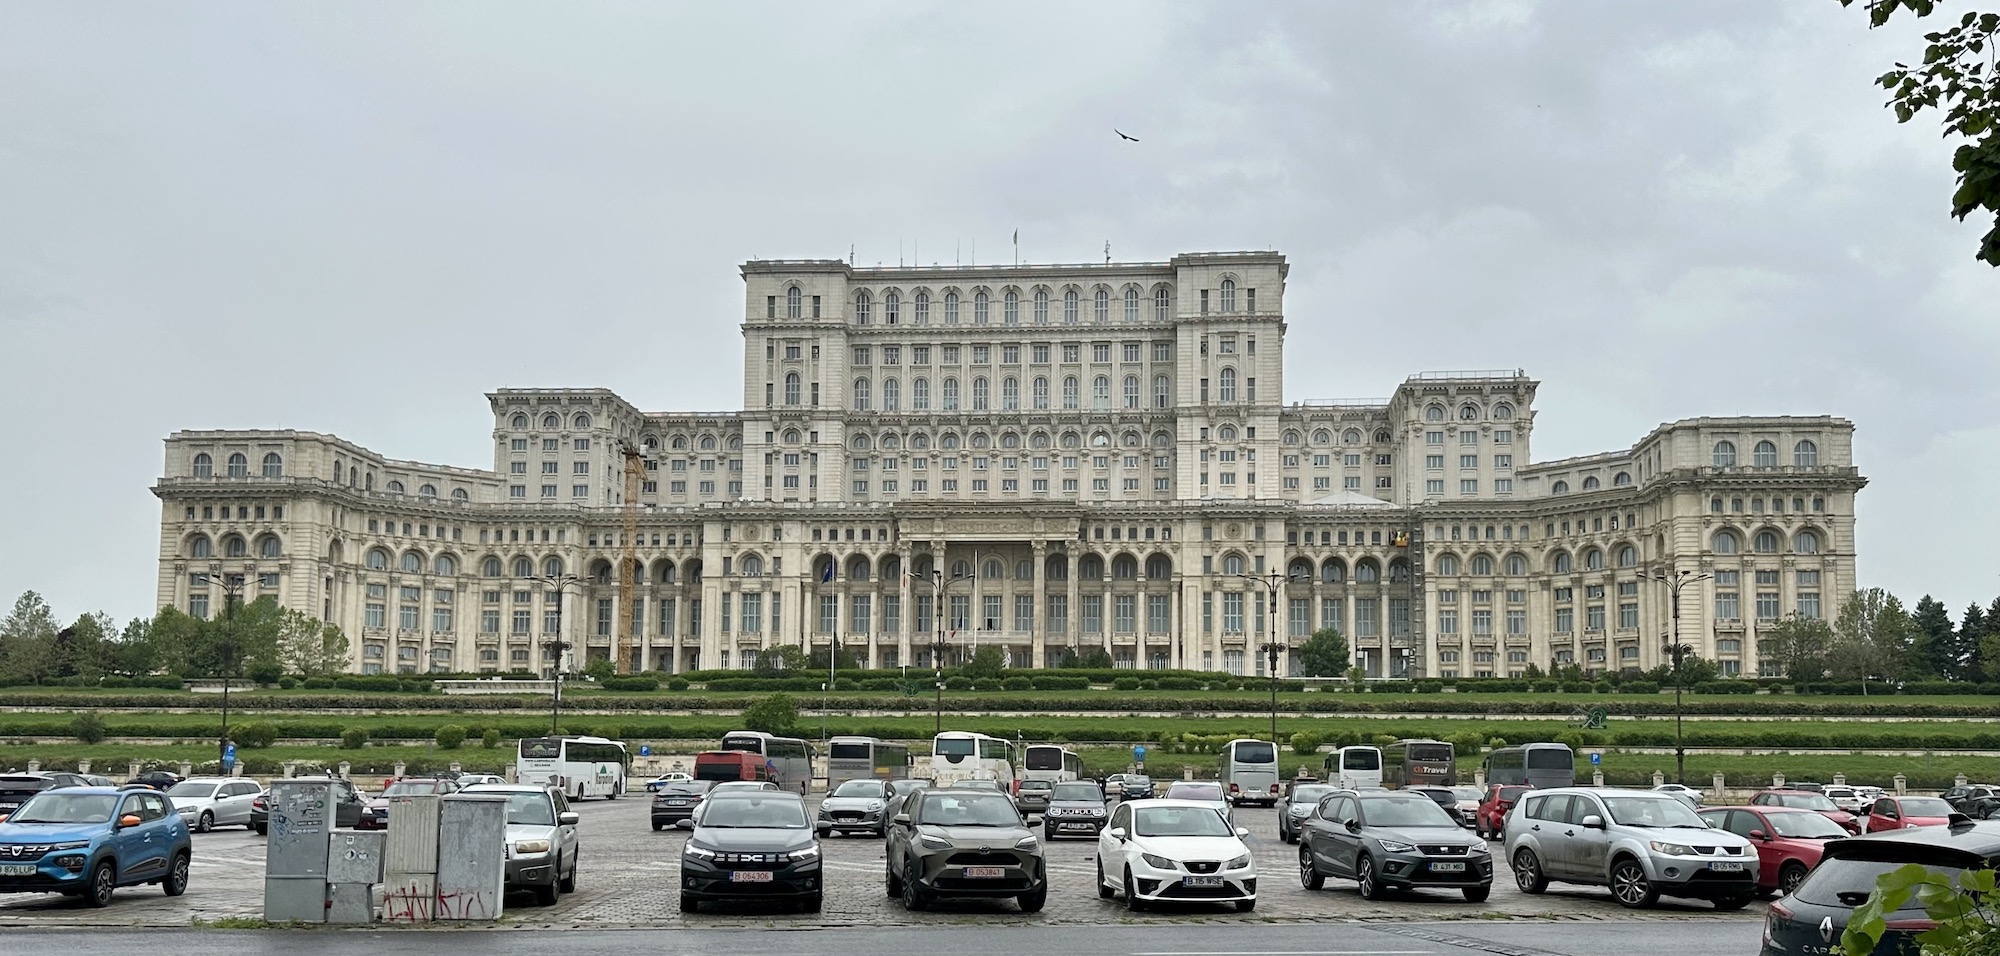 Bucharest – Parliament Palace